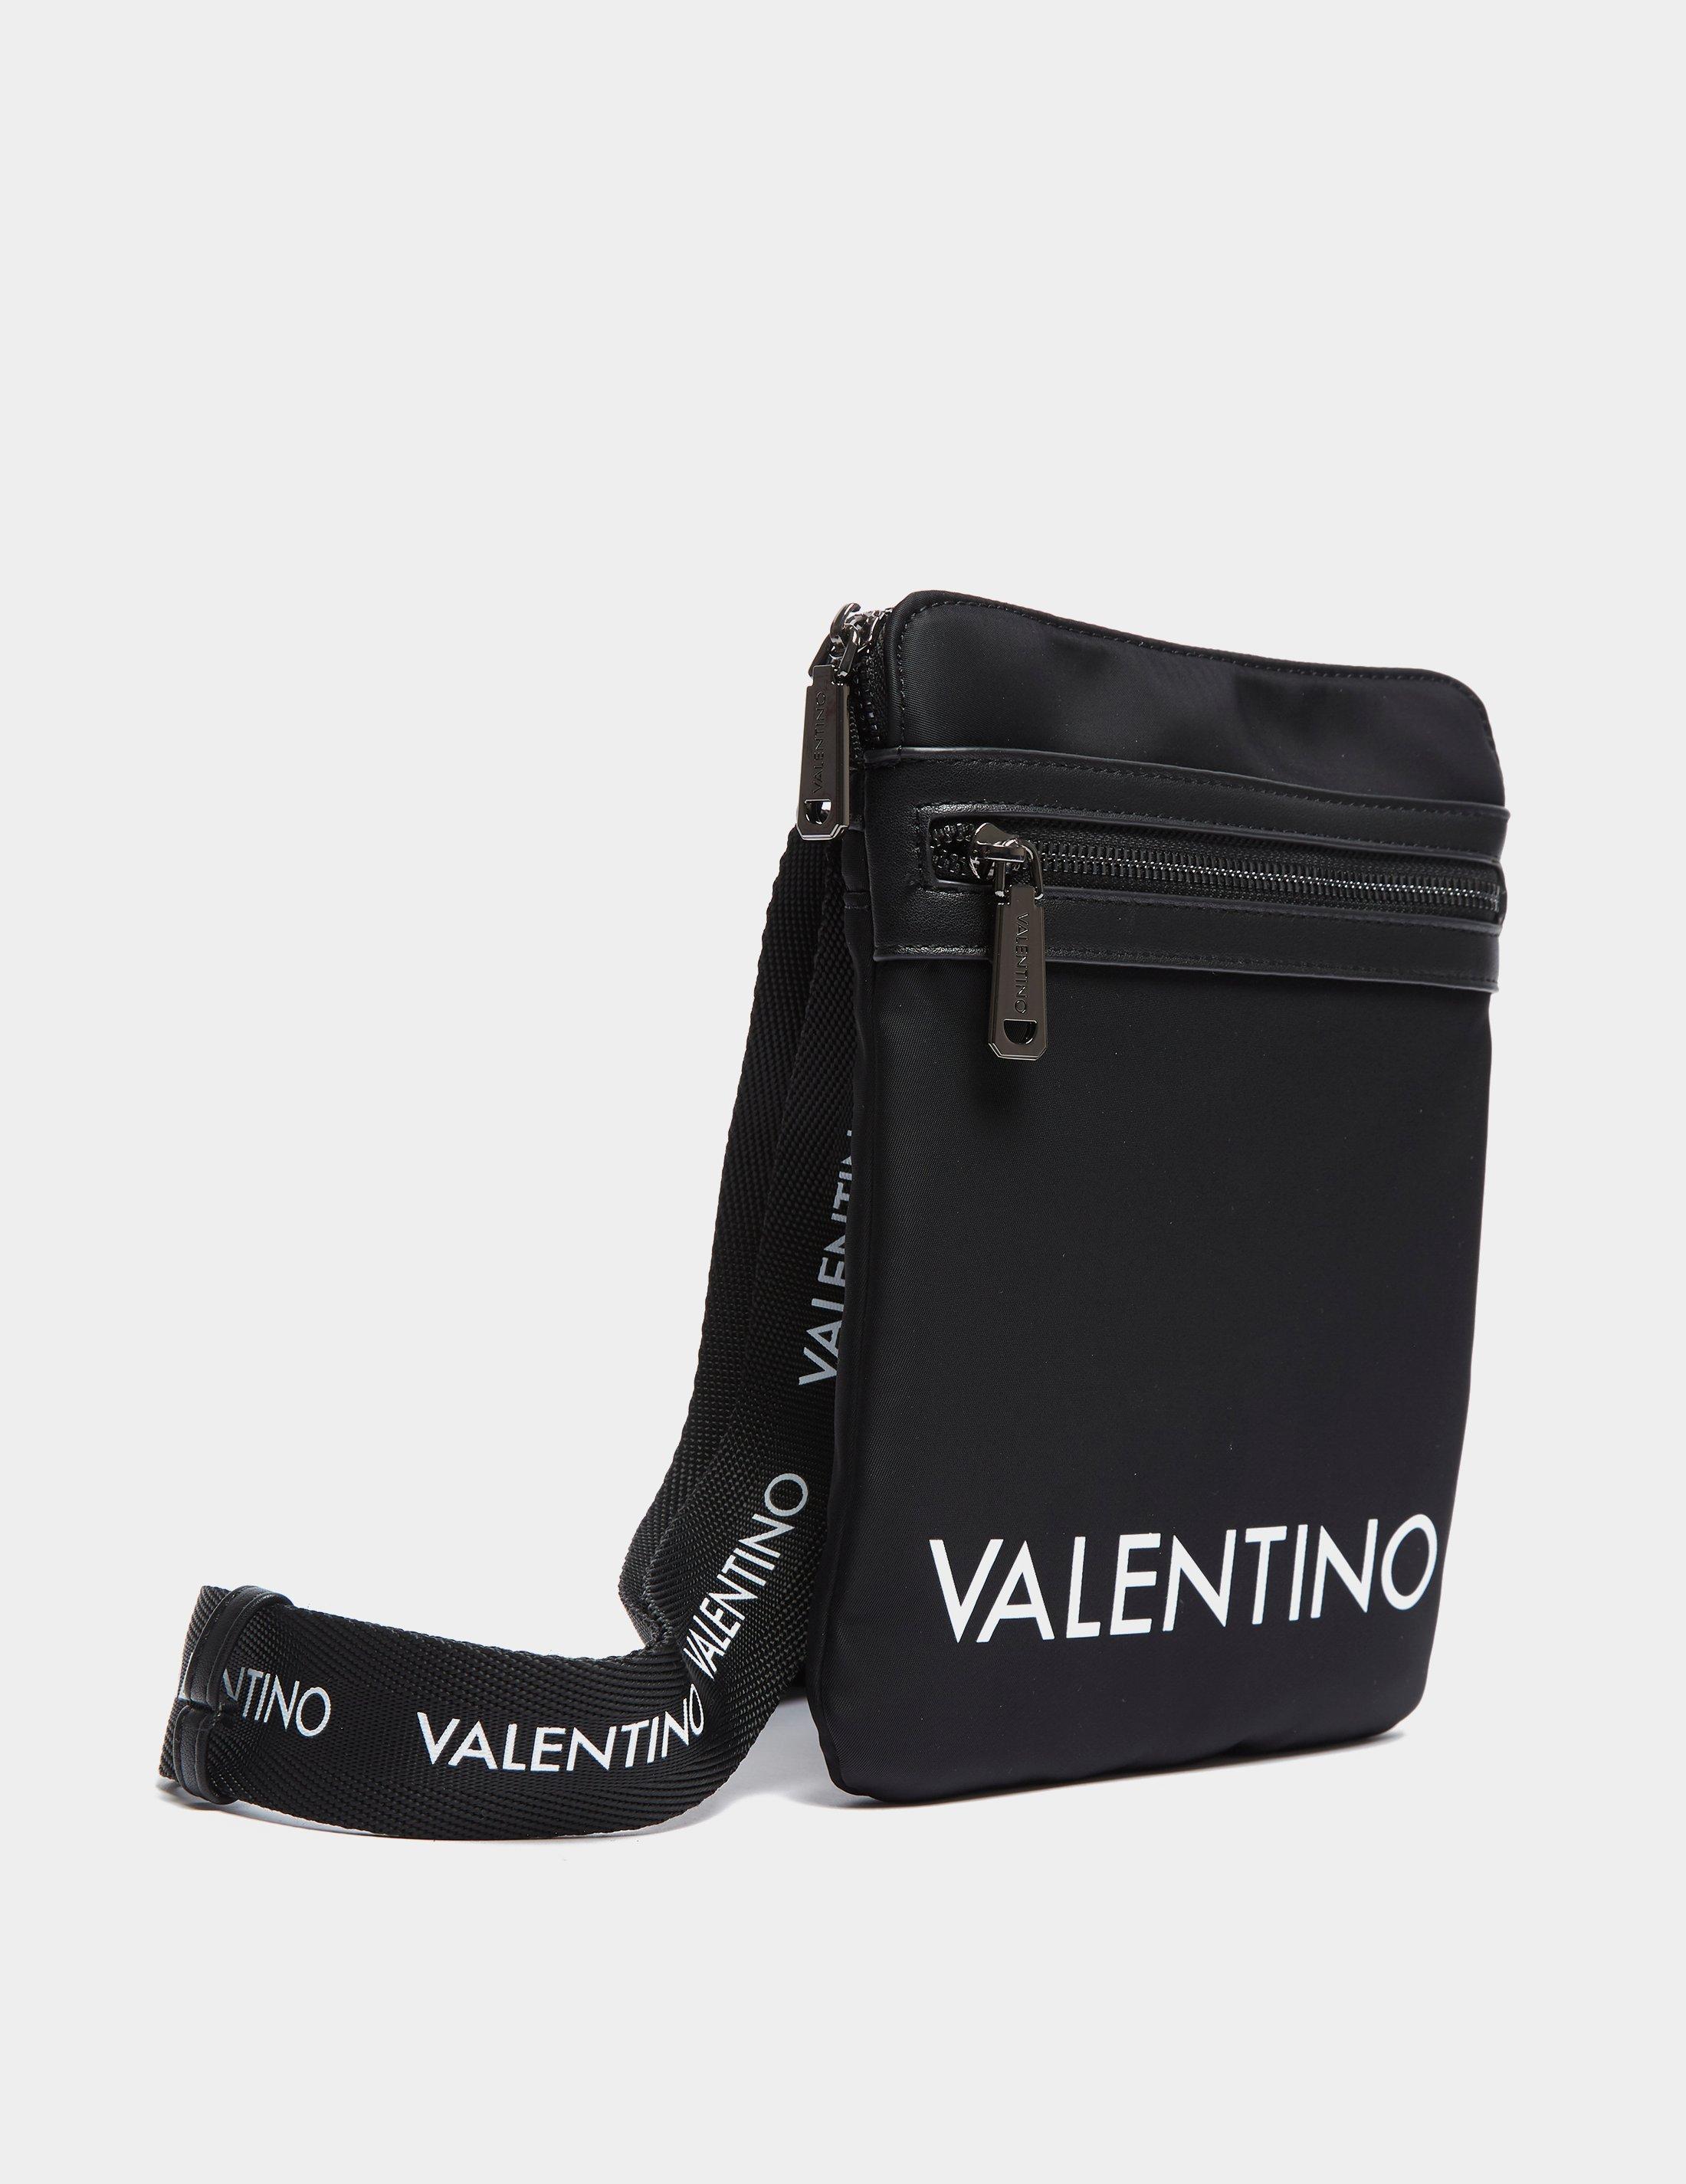 Mario Valentino Side Bag 56% - falkinnismar.is